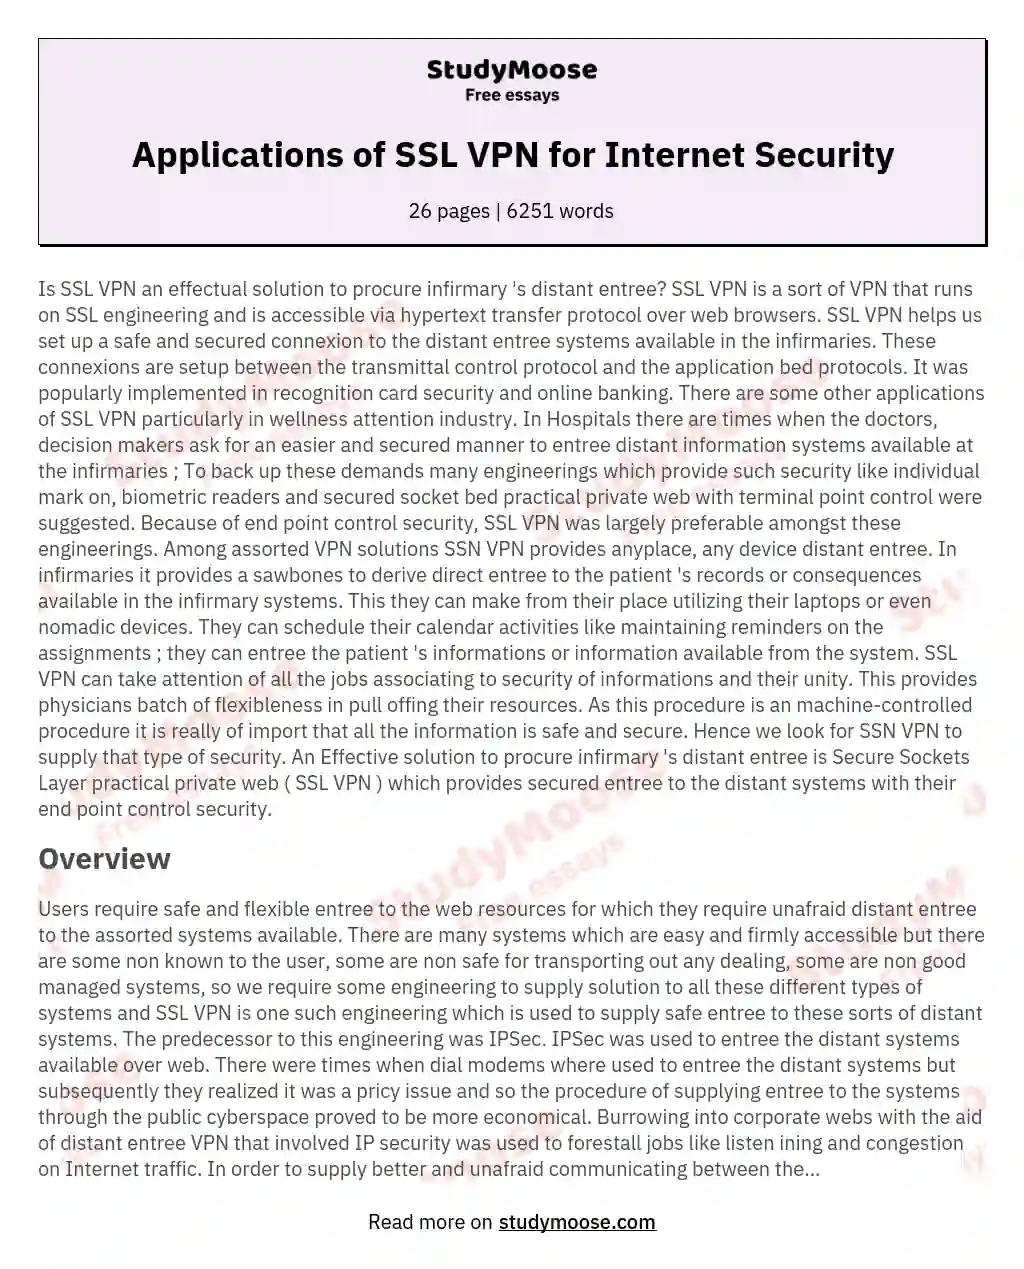 Applications of SSL VPN for Internet Security essay